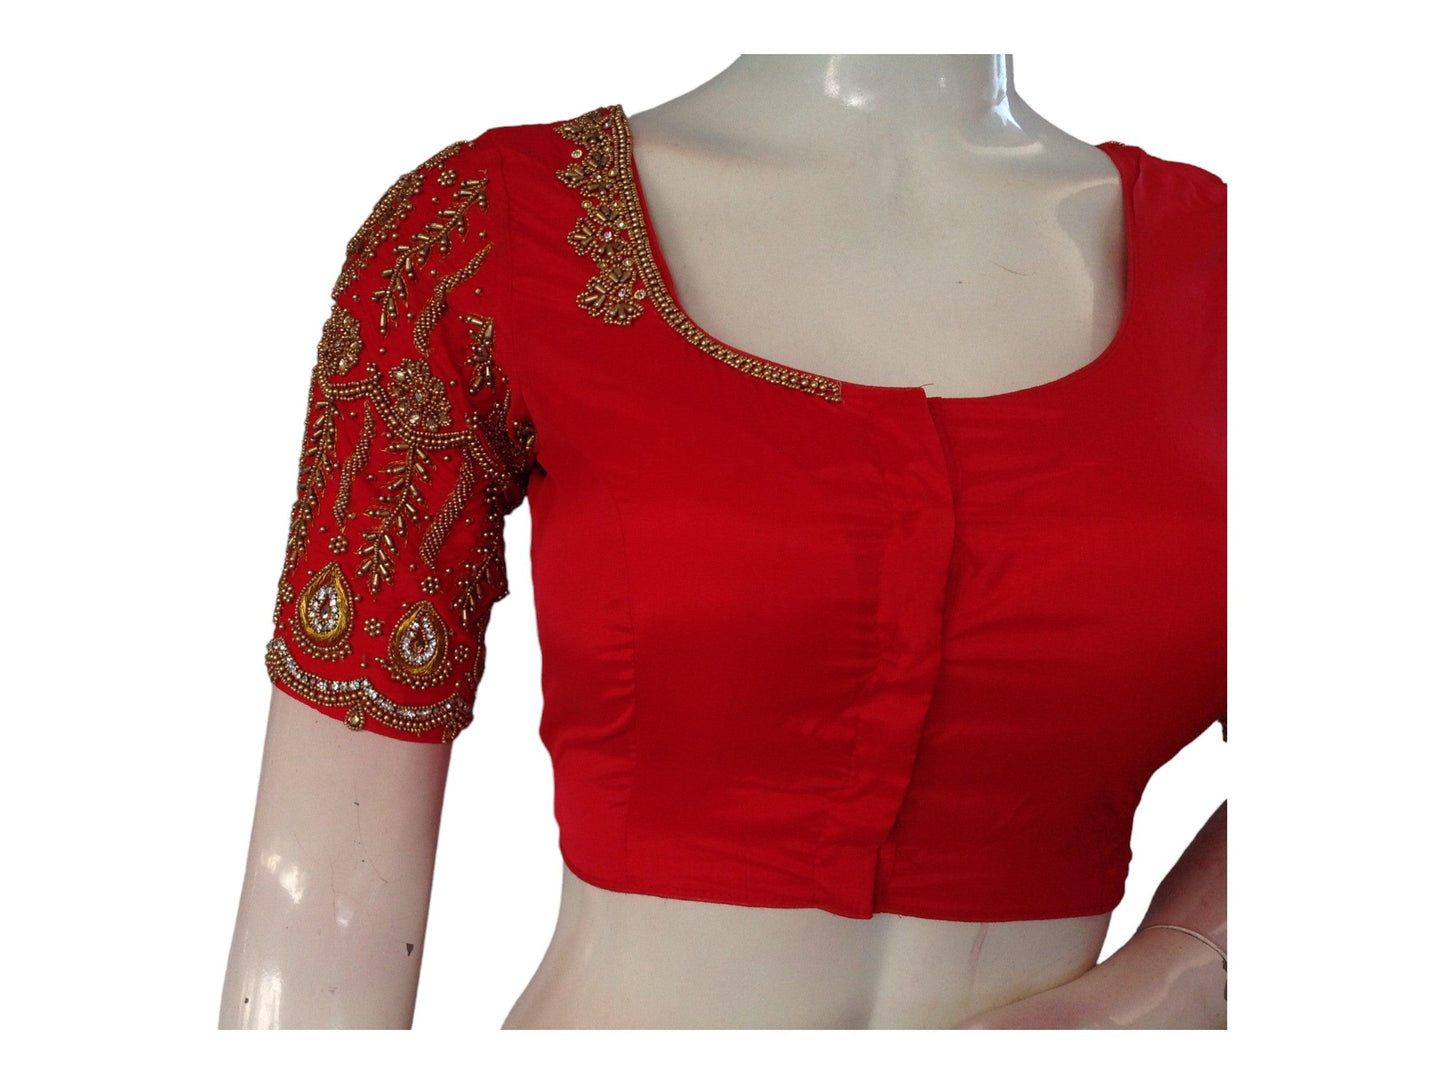 Exquisite Red Bridal Handwork Saree Blouse, Shop Indian Wedding Choli Online